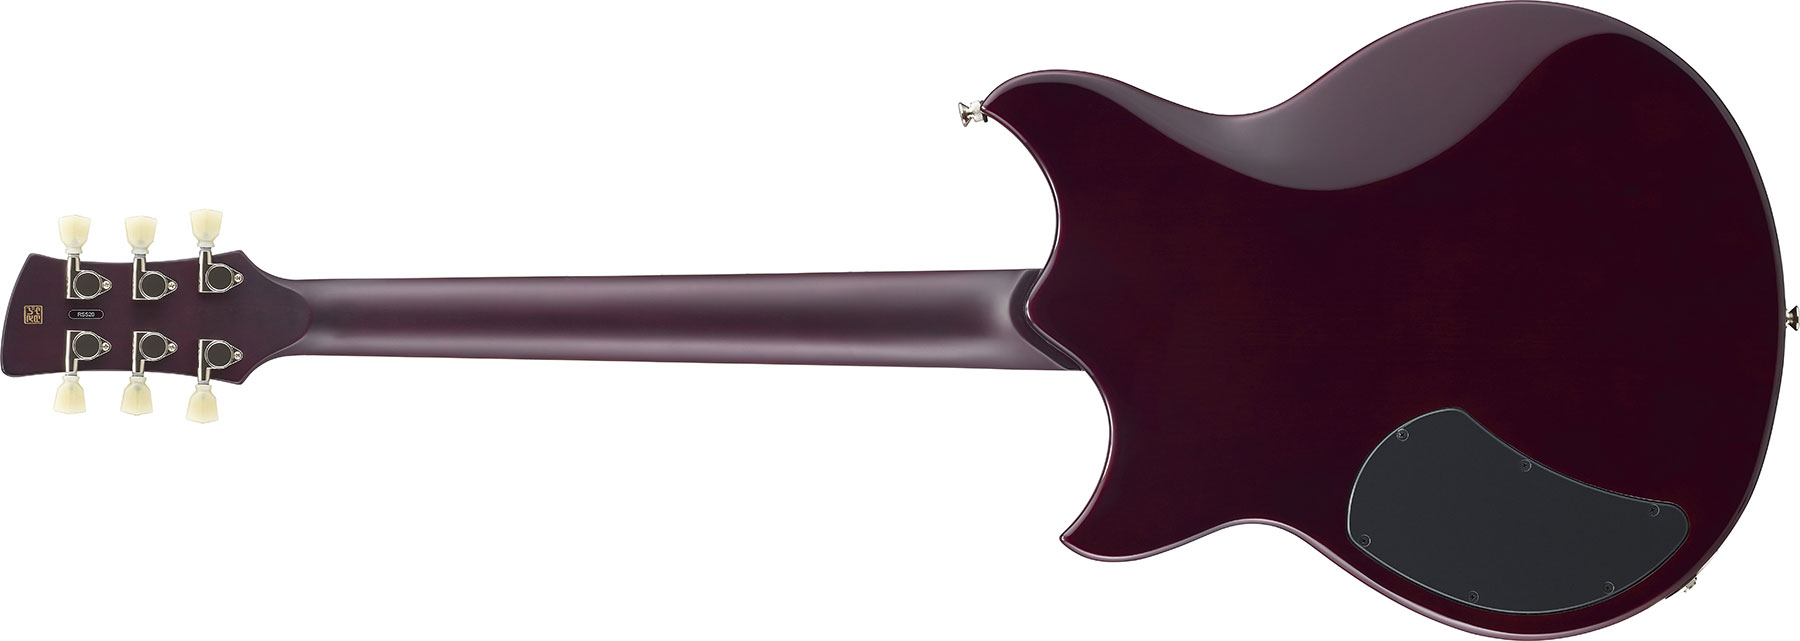 Yamaha Rss20 Revstar Standard Hh Ht Rw - Hot Merlot - Guitarra eléctrica de doble corte. - Variation 2